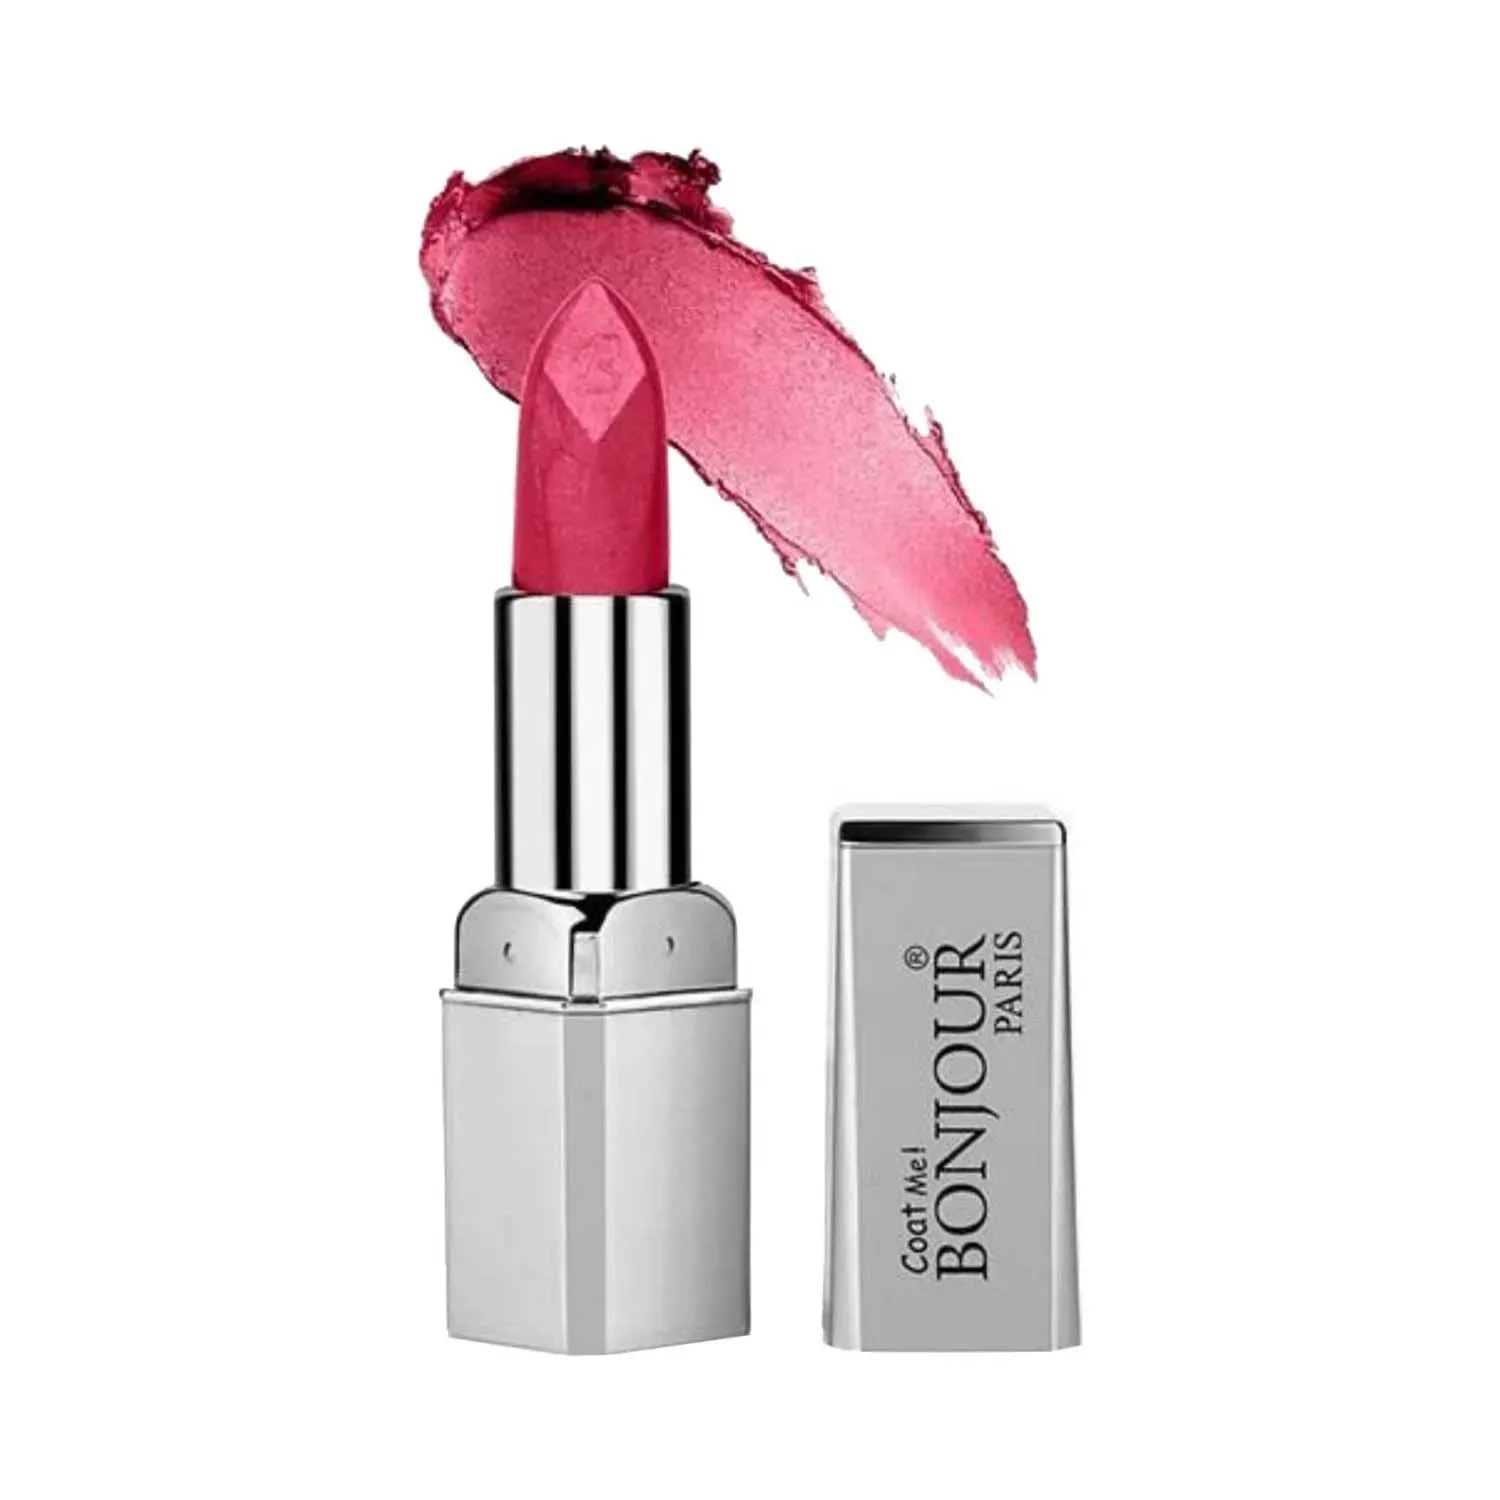 Bonjour Paris | Bonjour Paris Premium Metallic Shine Lipstick - Metallic Rose Nude Pink (4.2g)